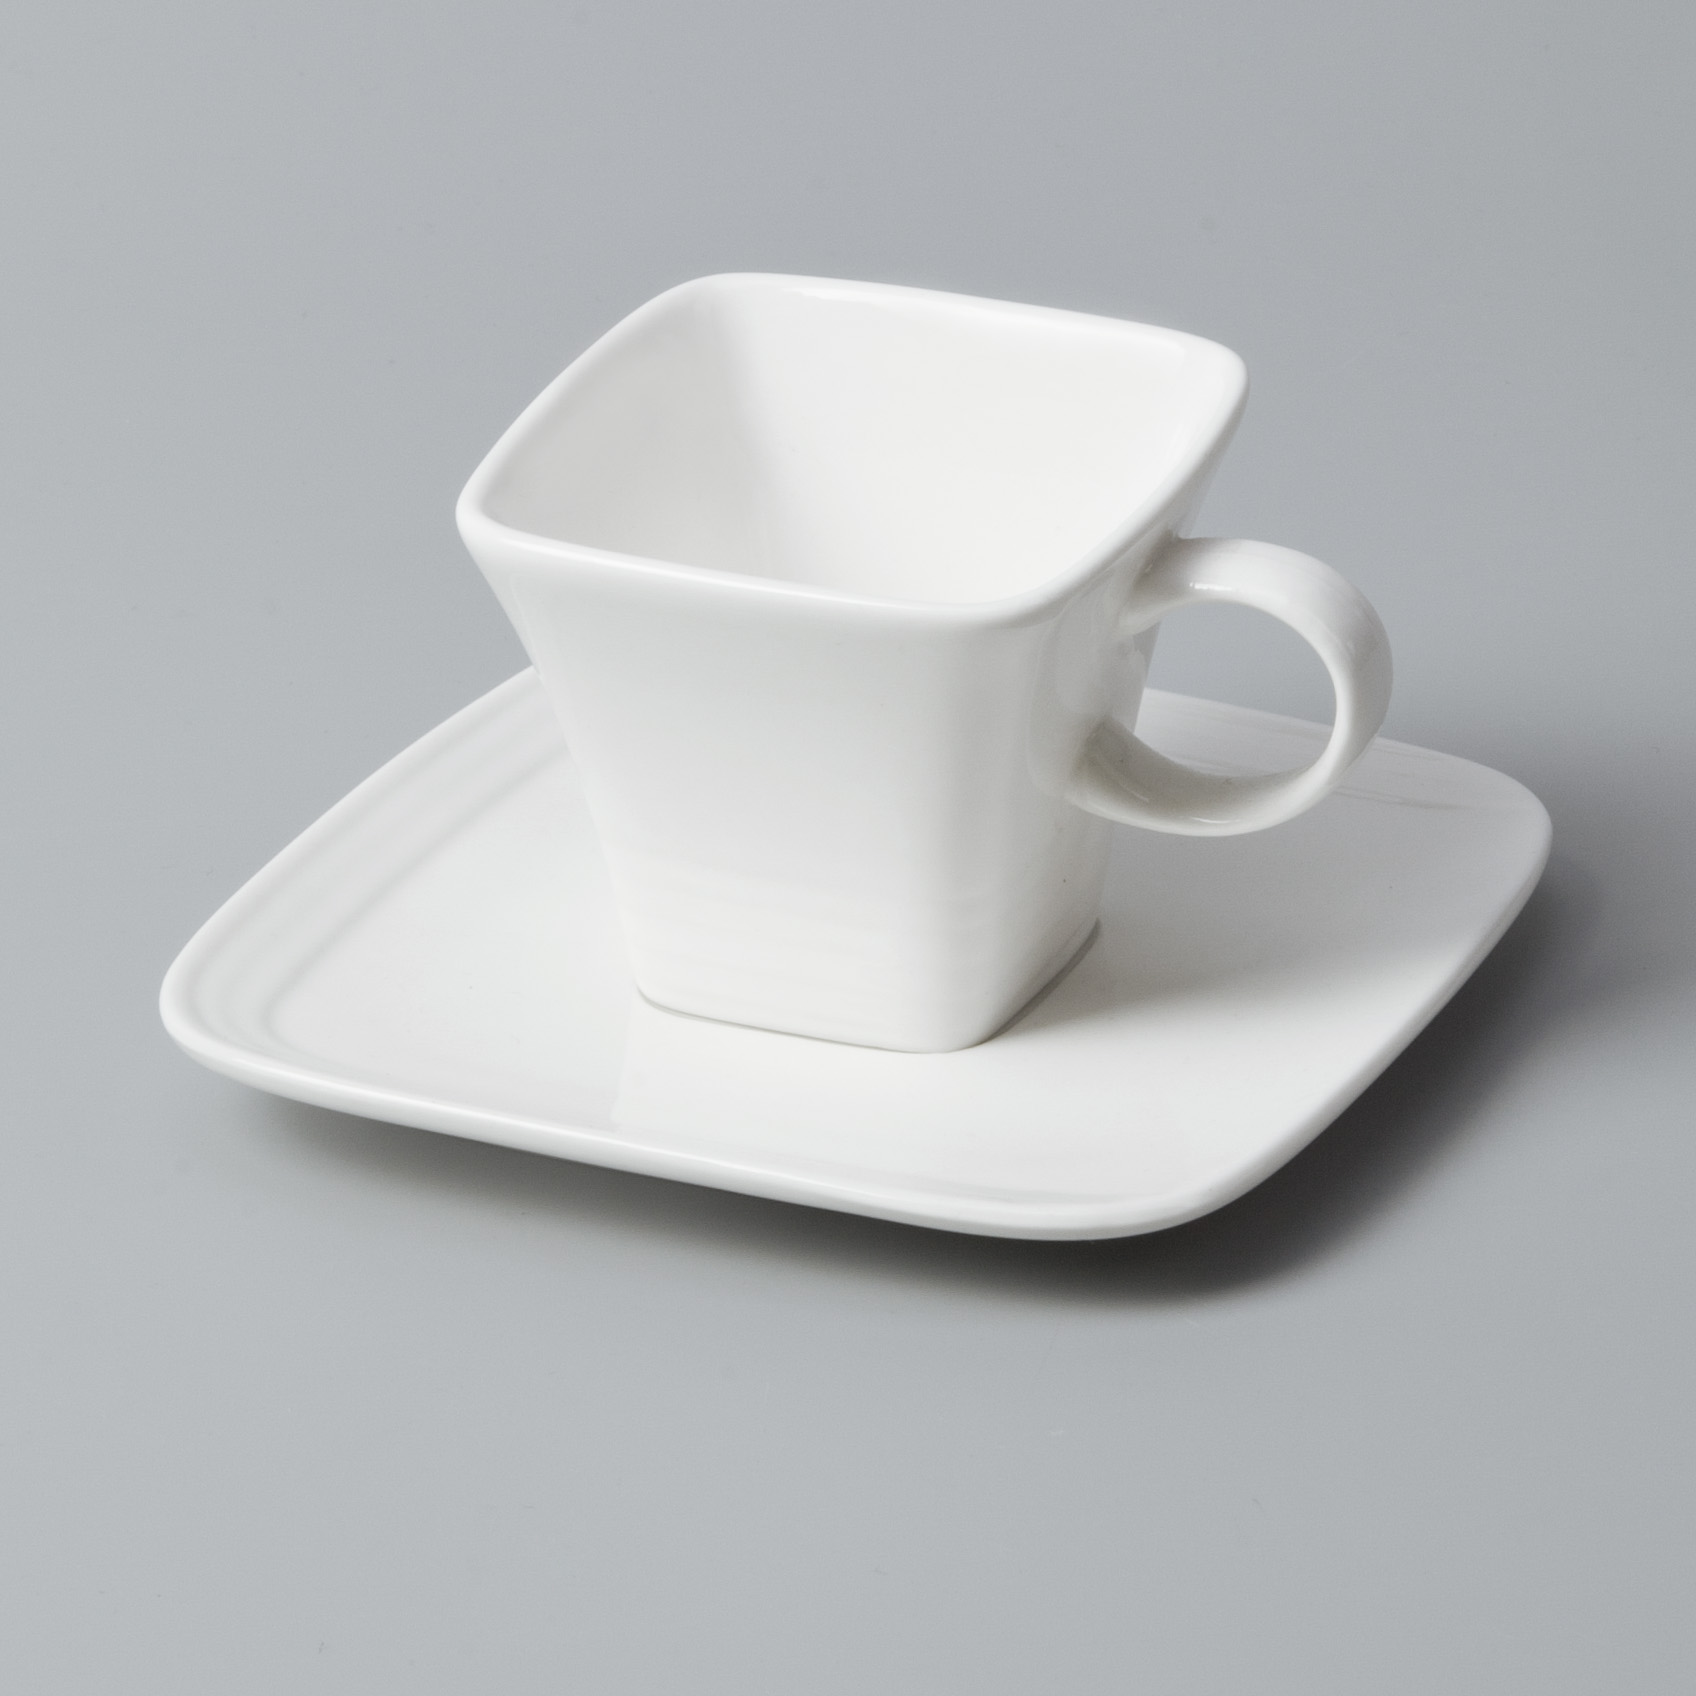 Two Eight irregular french white porcelain dinnerware series for hotel-6